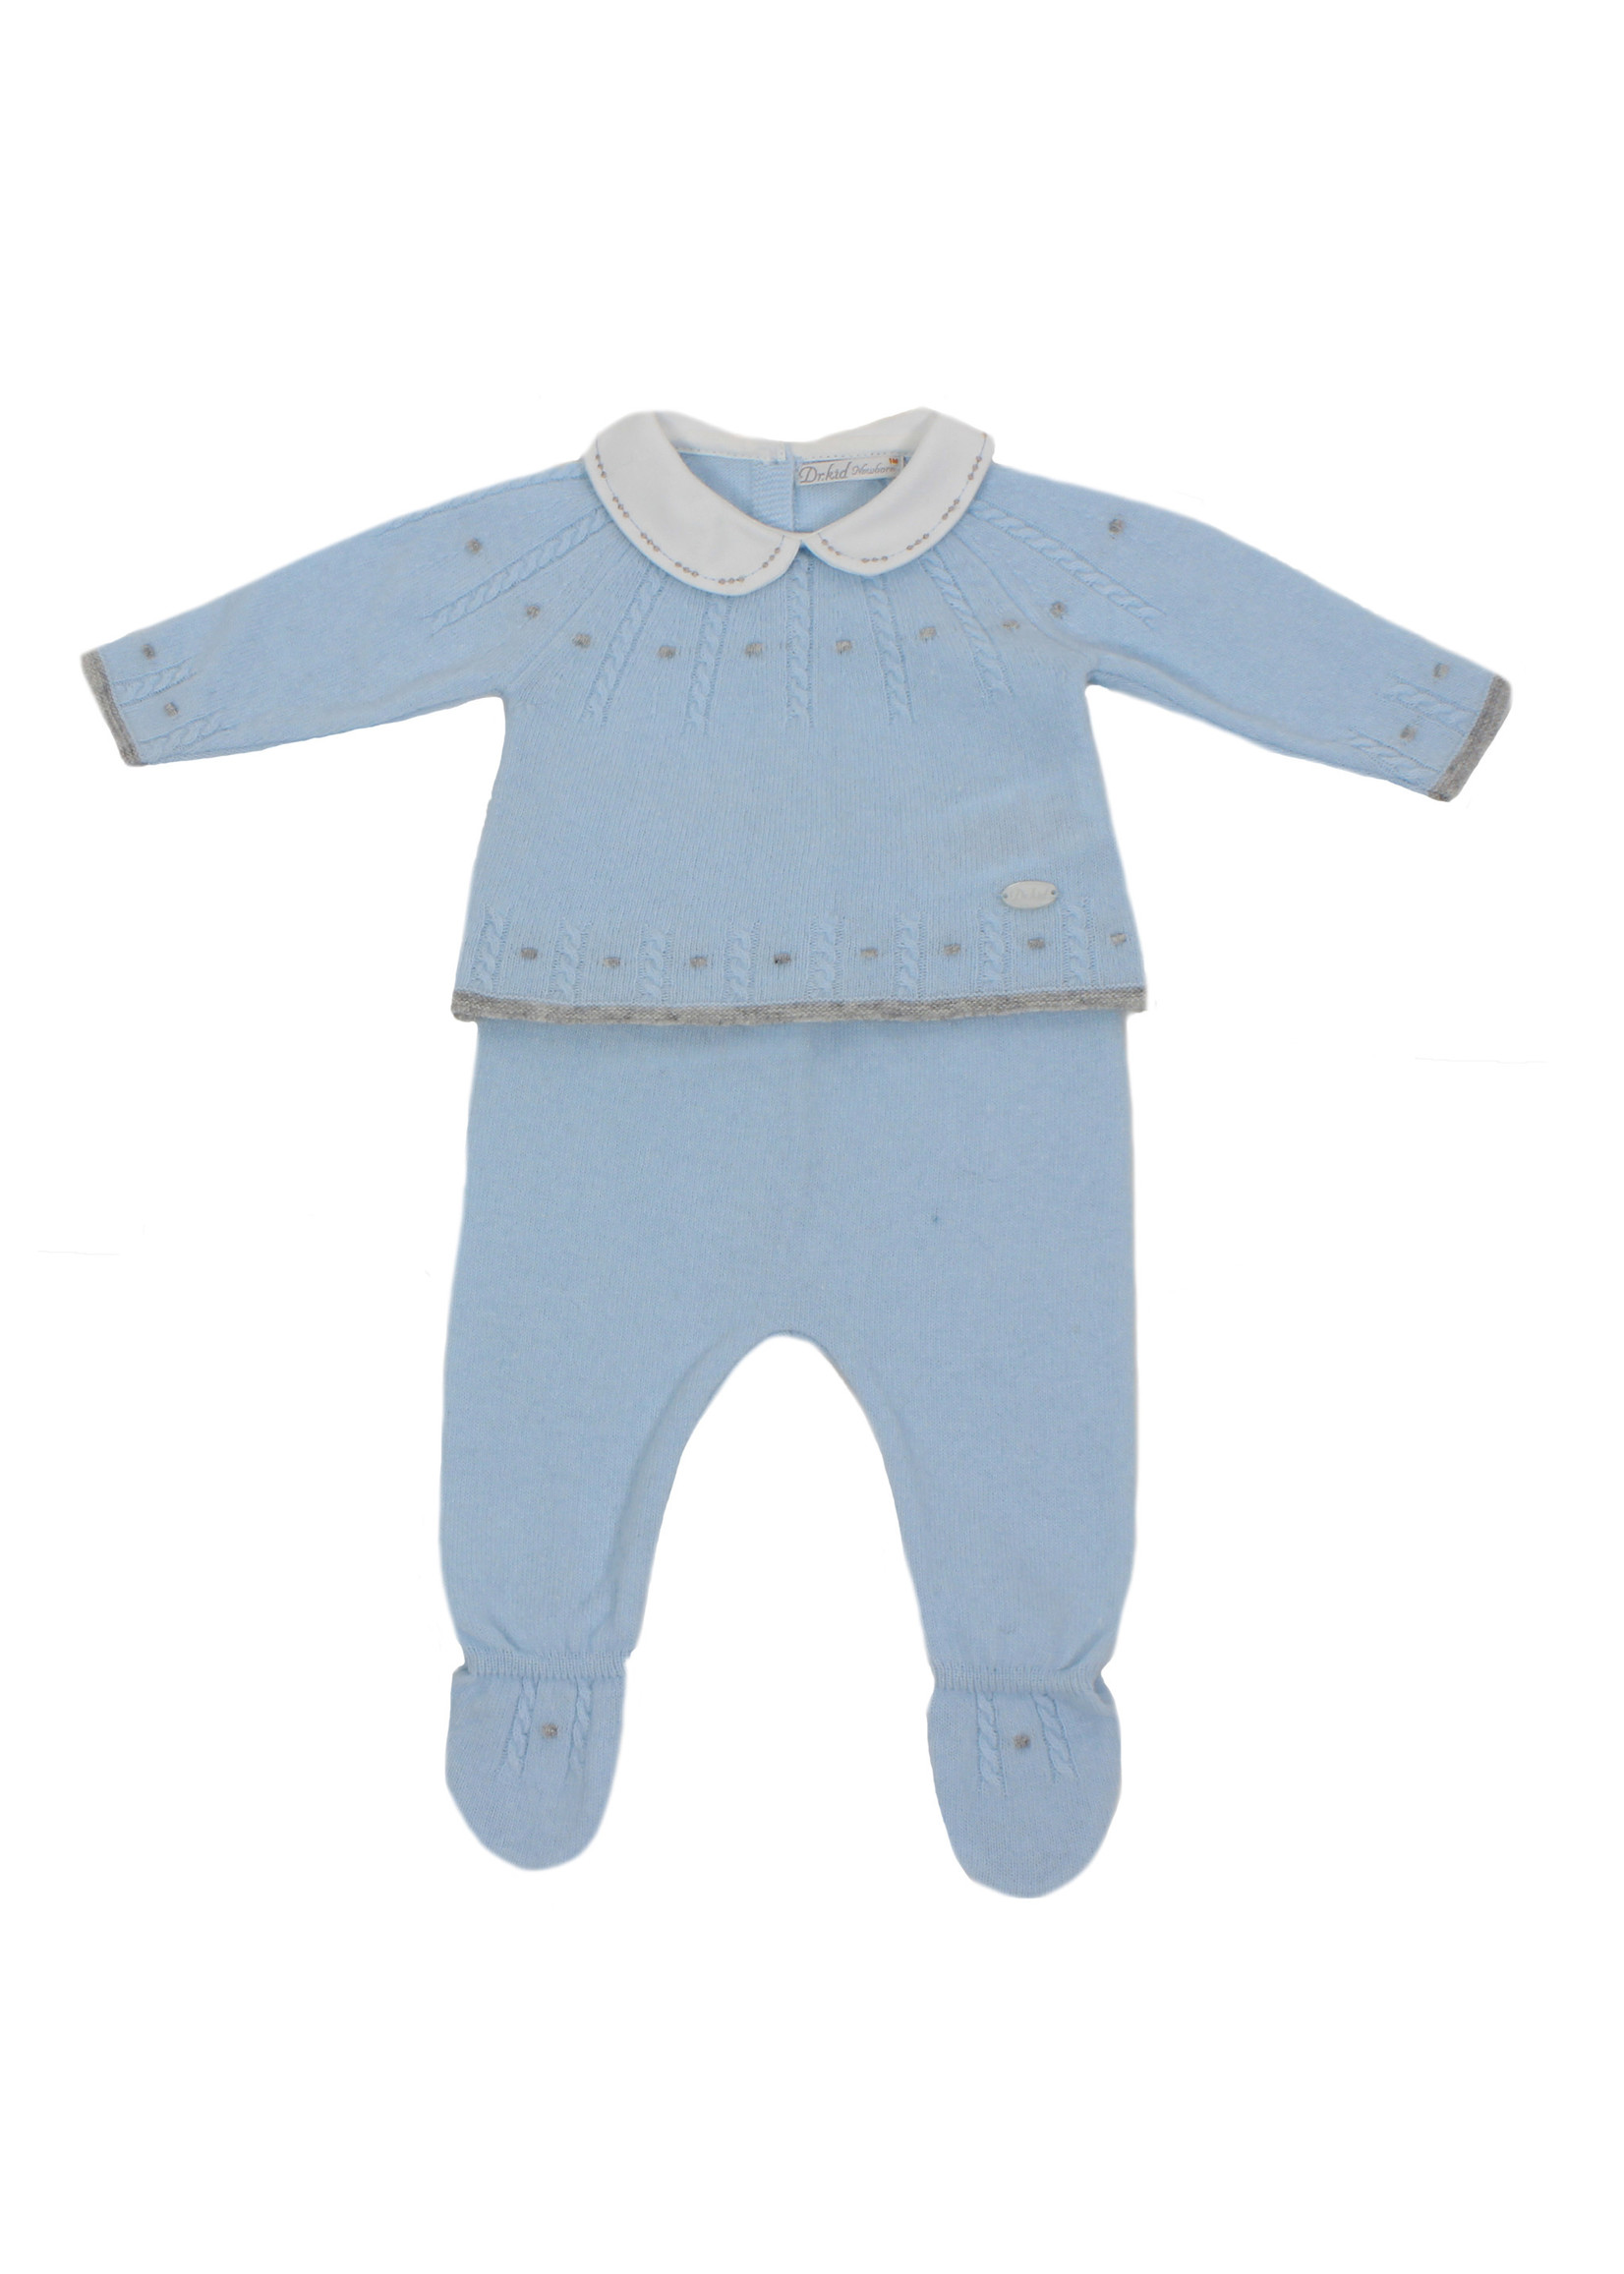 Dr Kid Conjunt (Newborn) 105-Azul Bebé-DK131